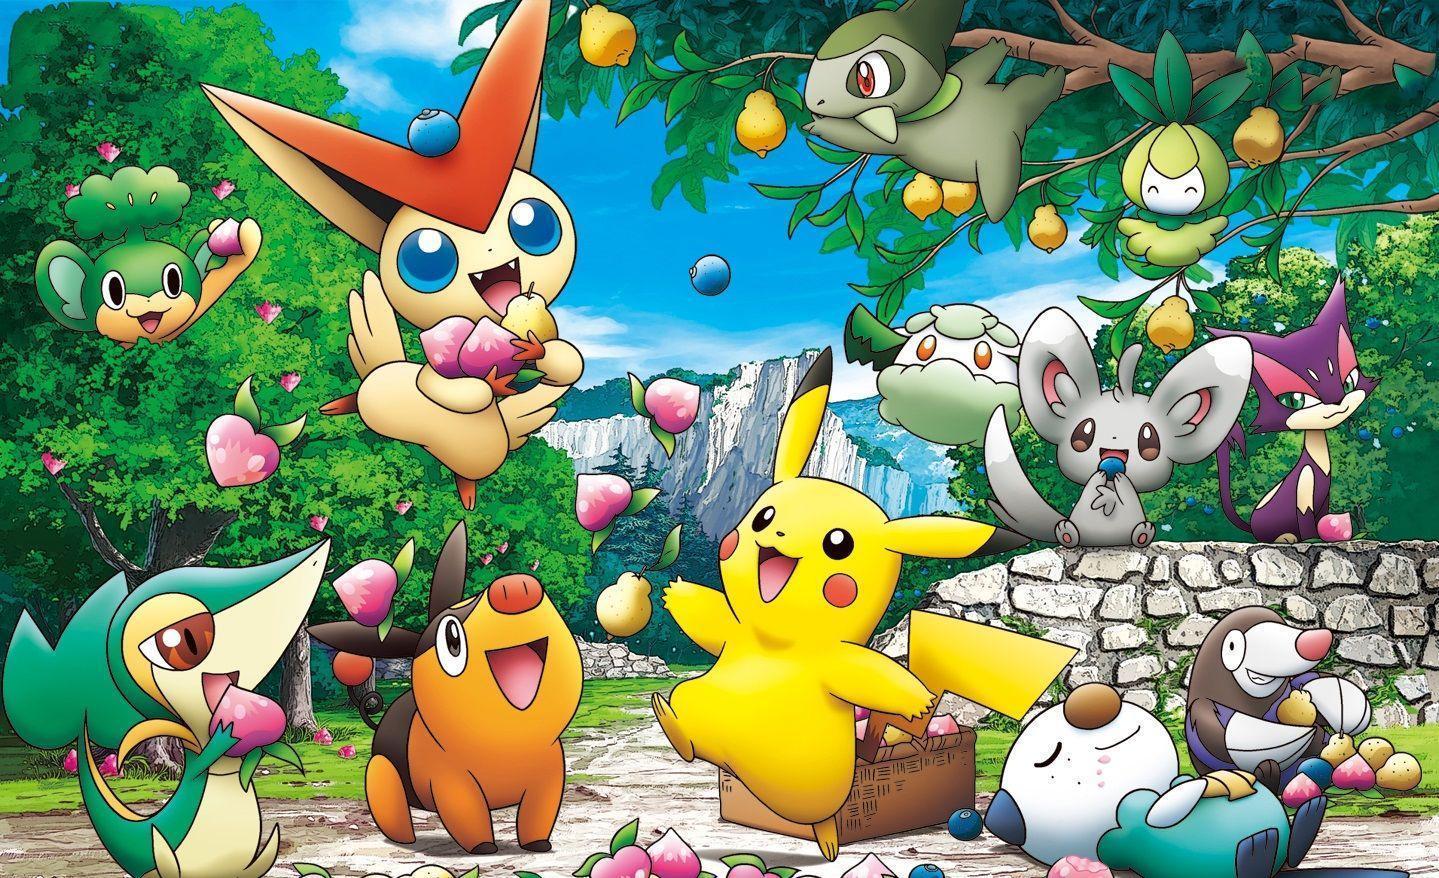 Pansage (Pokémon) HD Wallpaper and Background Image